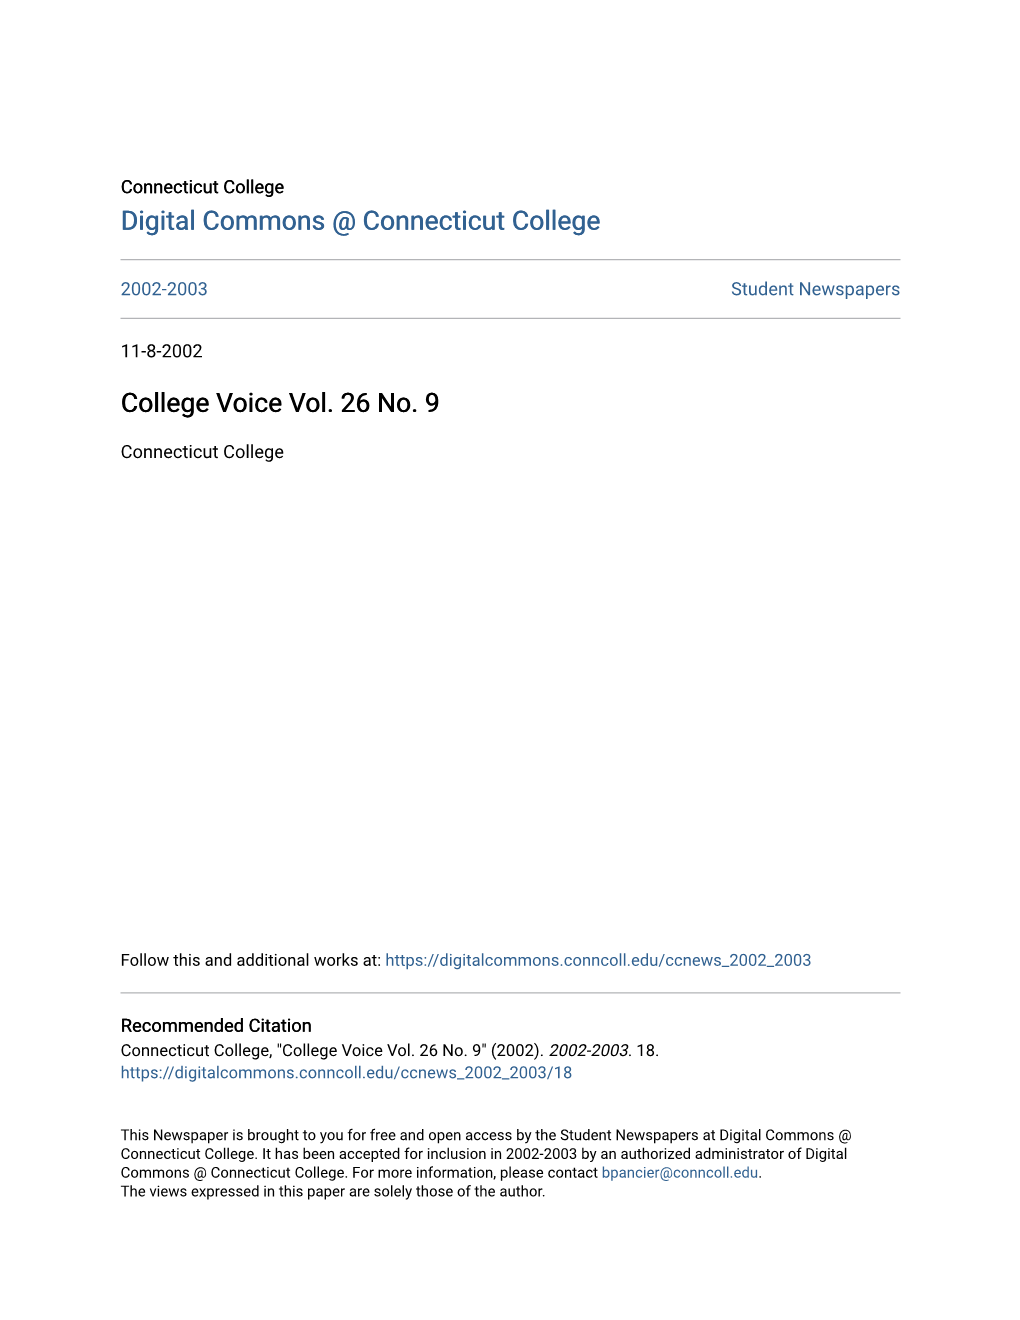 College Voice Vol. 26 No. 9